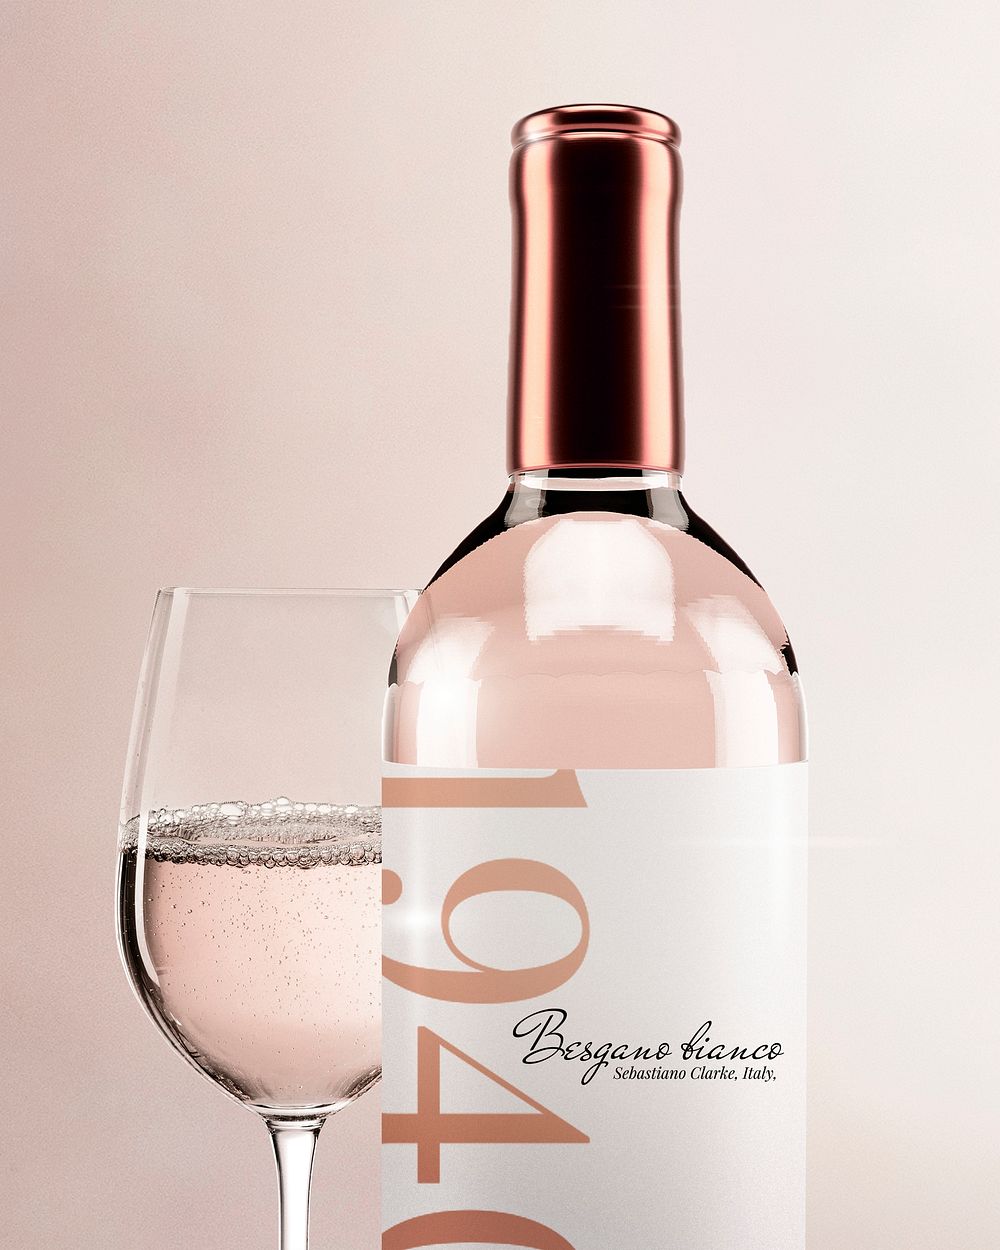 Ros&eacute; wine bottle mockup, editable festive design